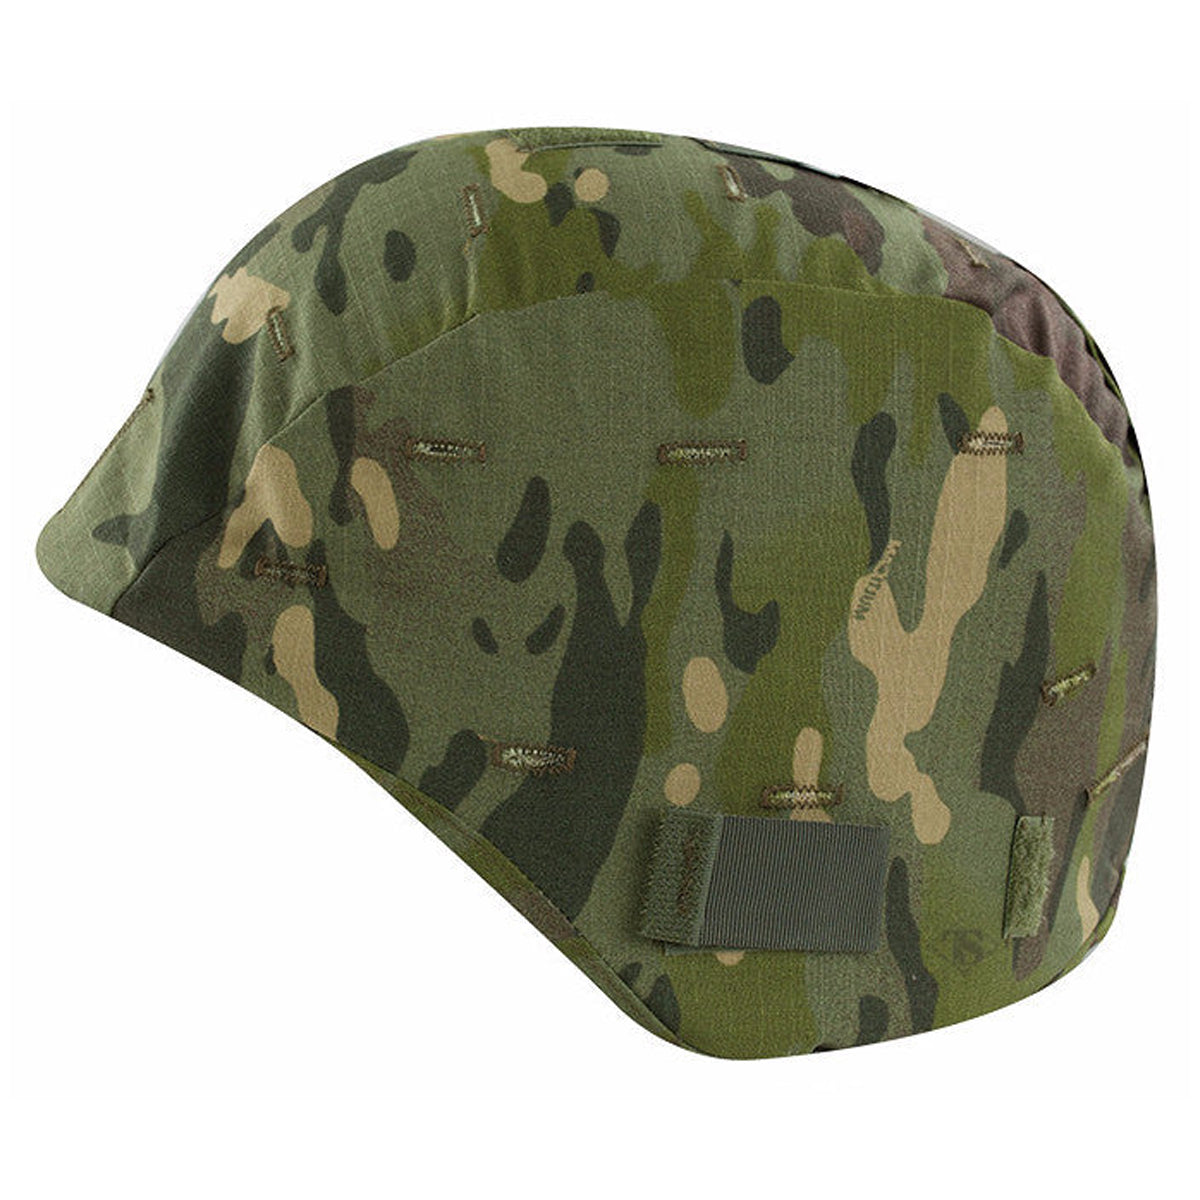 Tru-Spec Helmet Covers (Mich Kevlar)